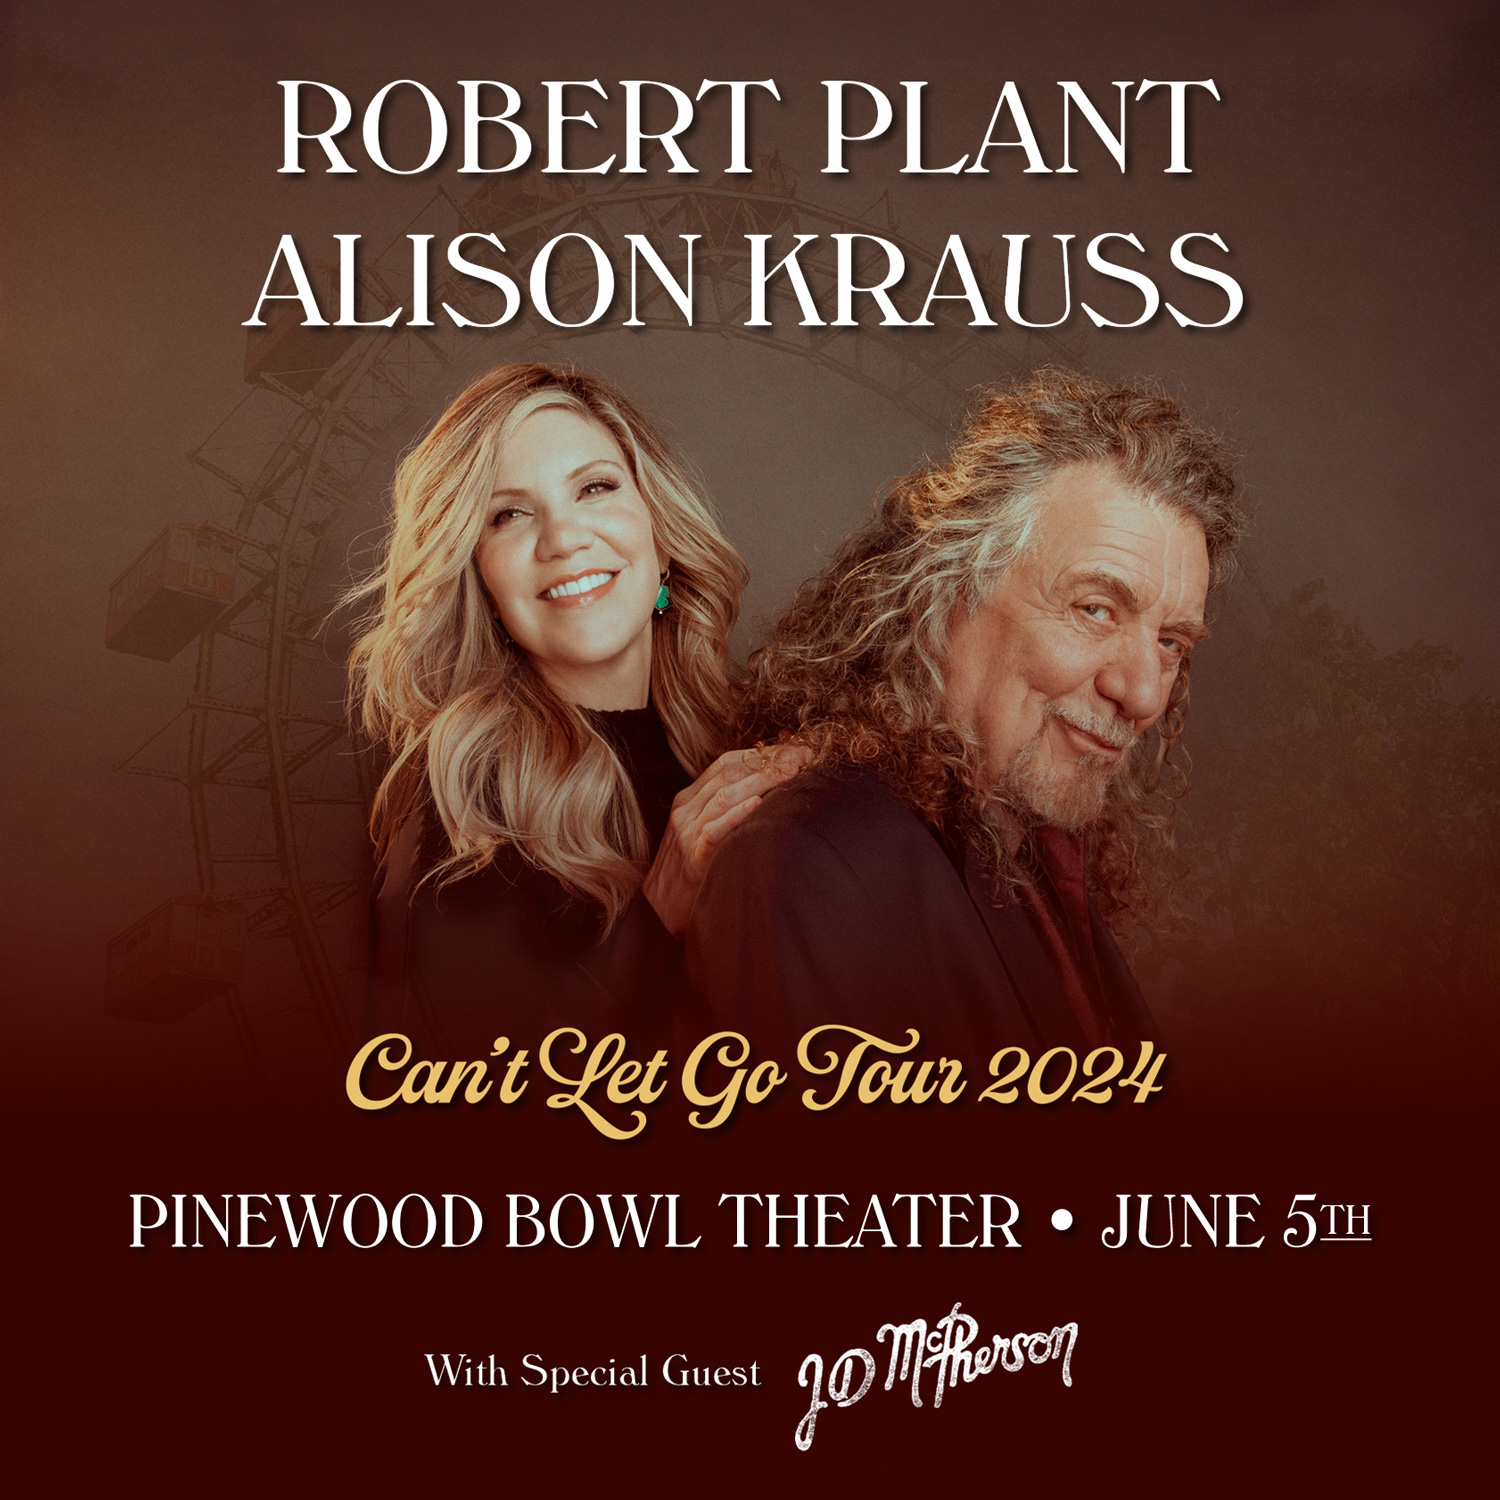 <h1 class="tribe-events-single-event-title">Robert Plant & Alison Krauss</h1>